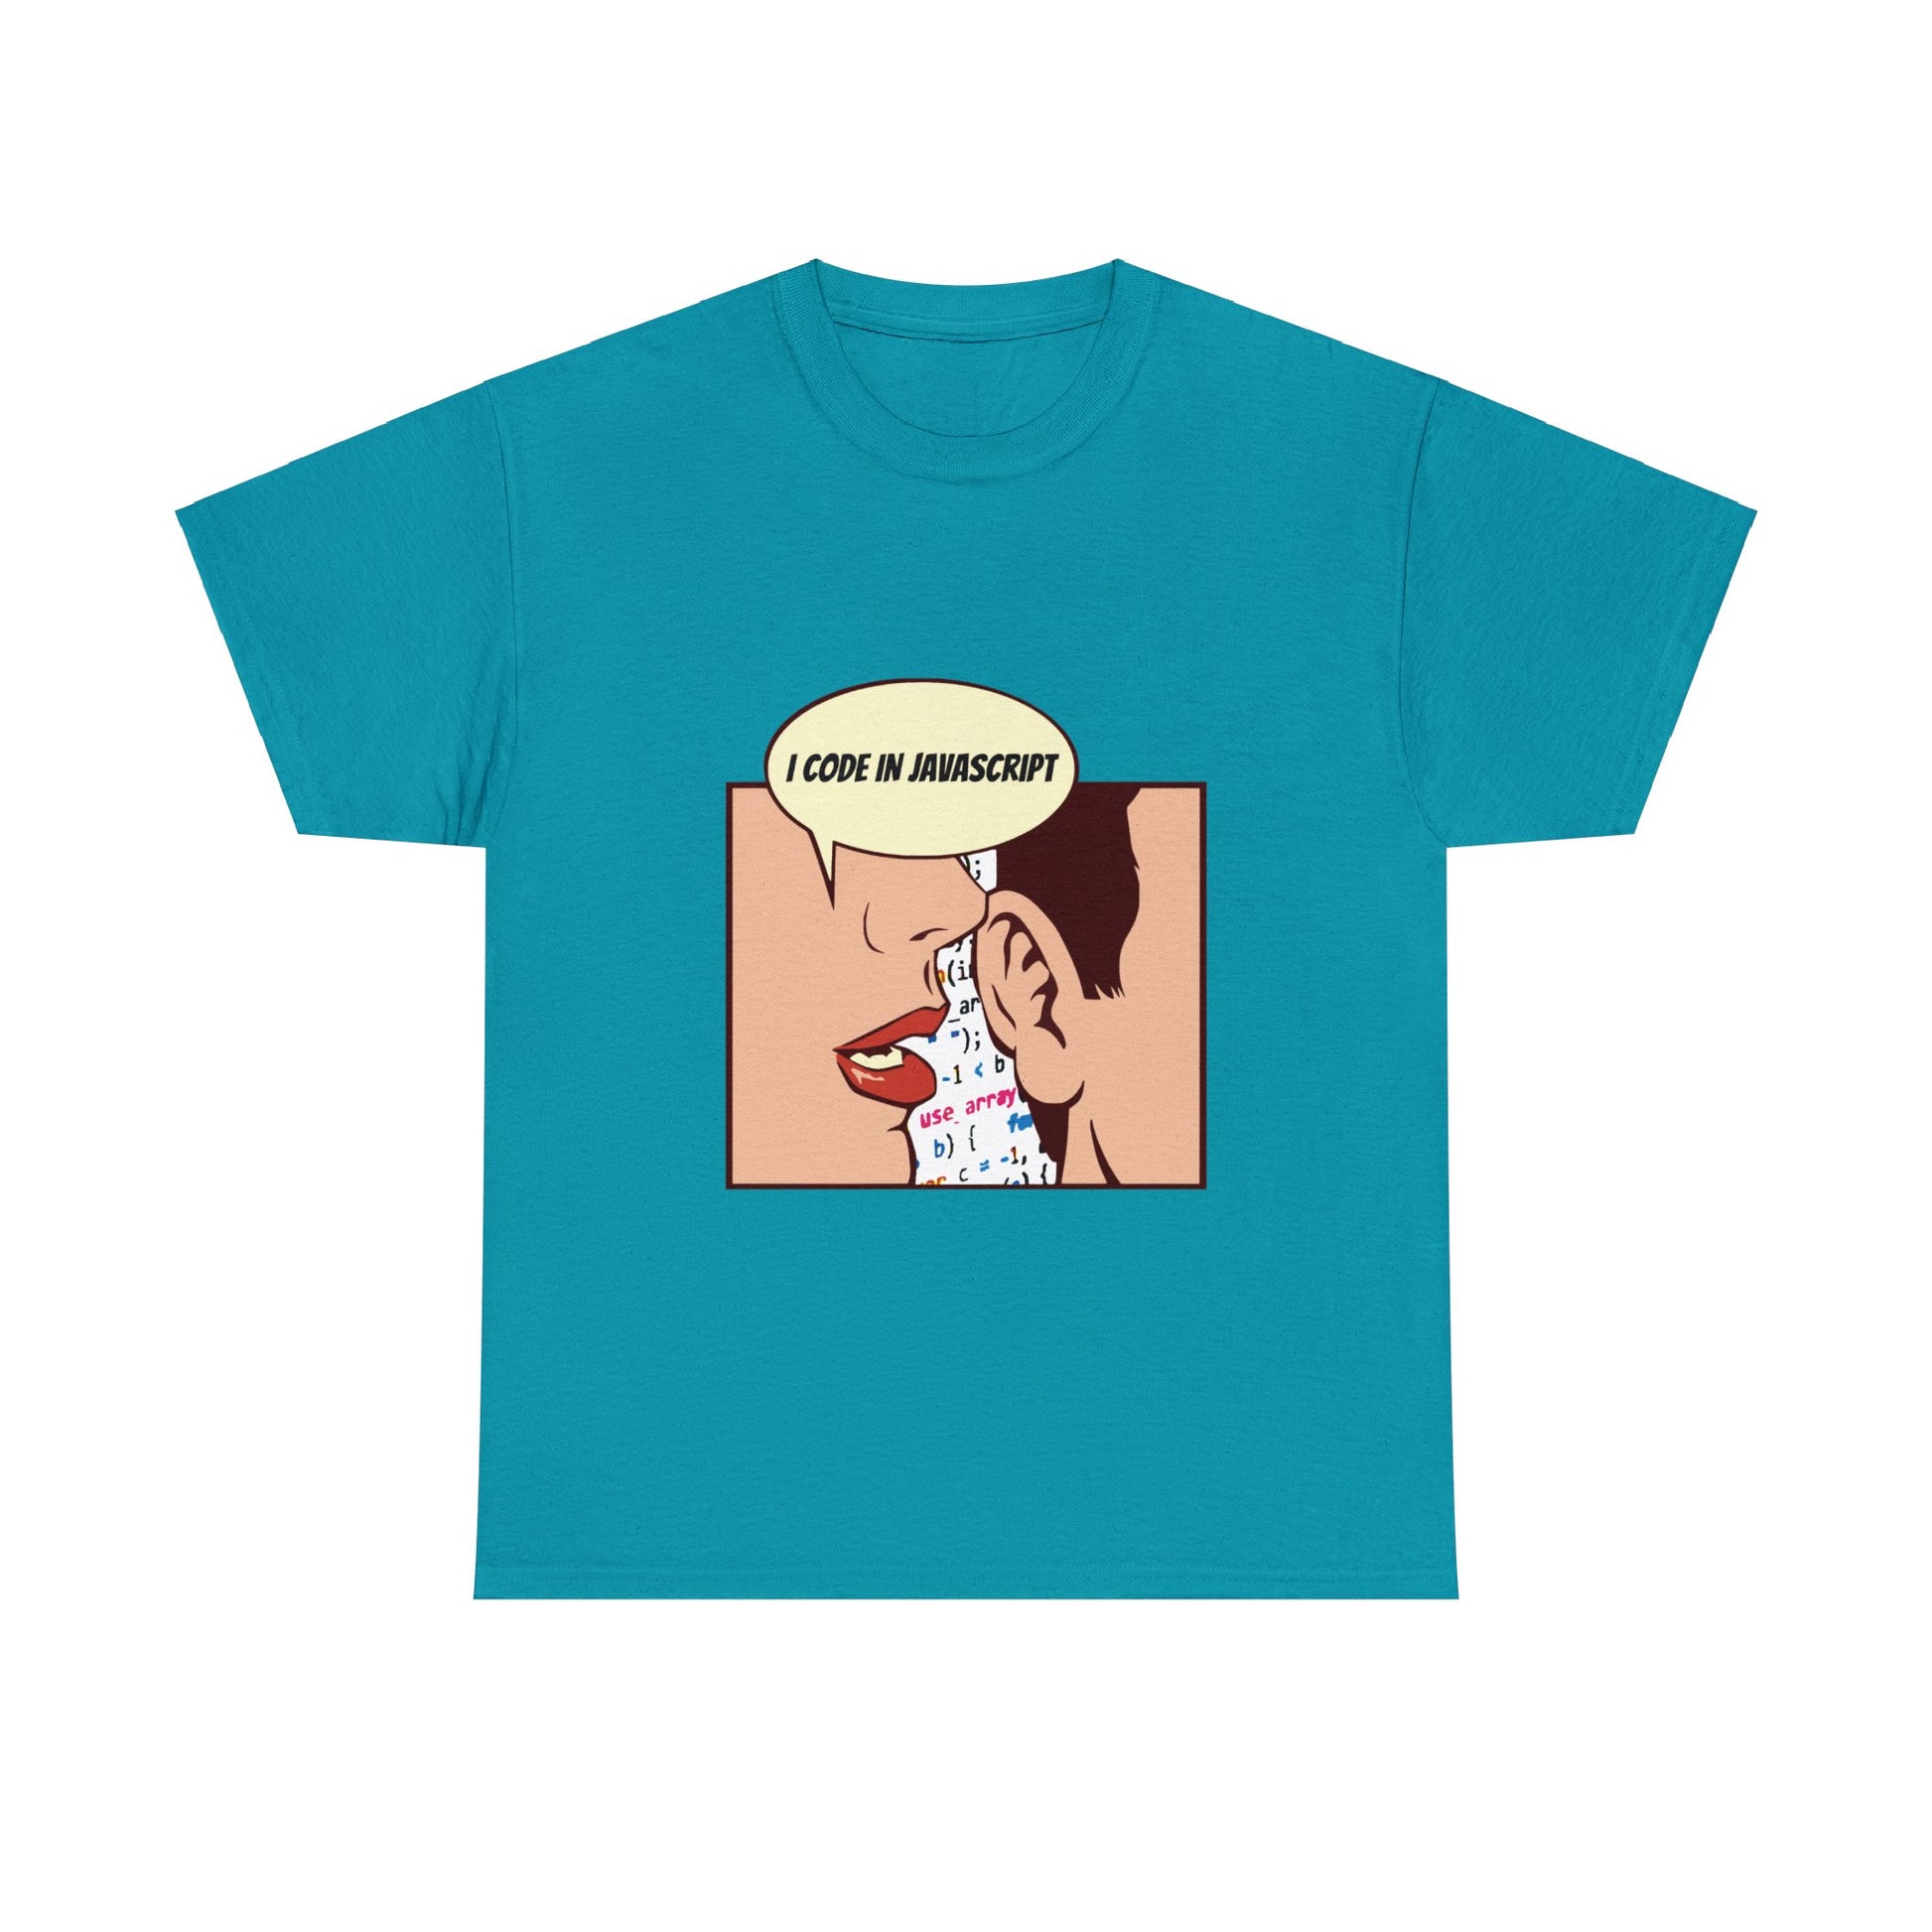 code-themed tshirt for javascript lovers